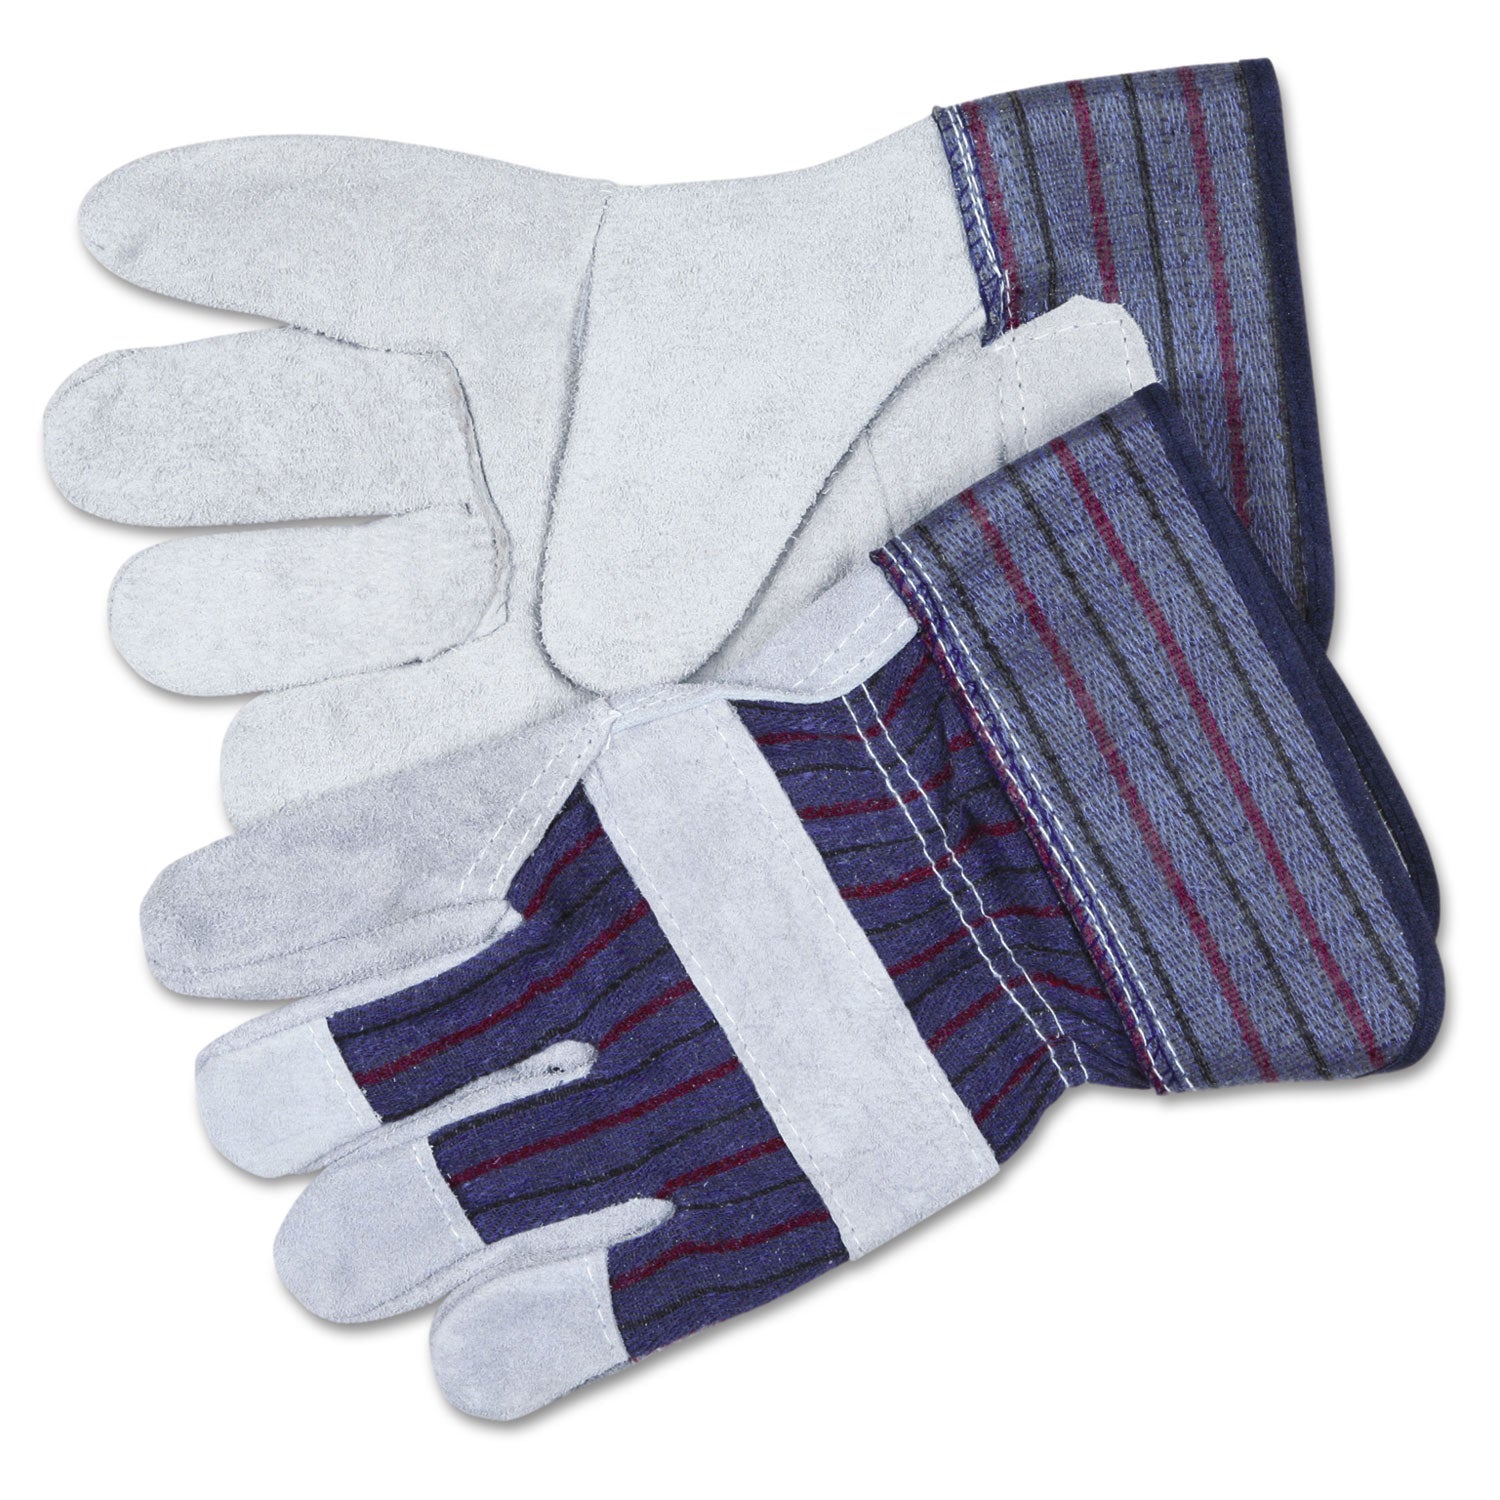 Split Leather Palm Gloves, X-Large, Gray, Pair - 